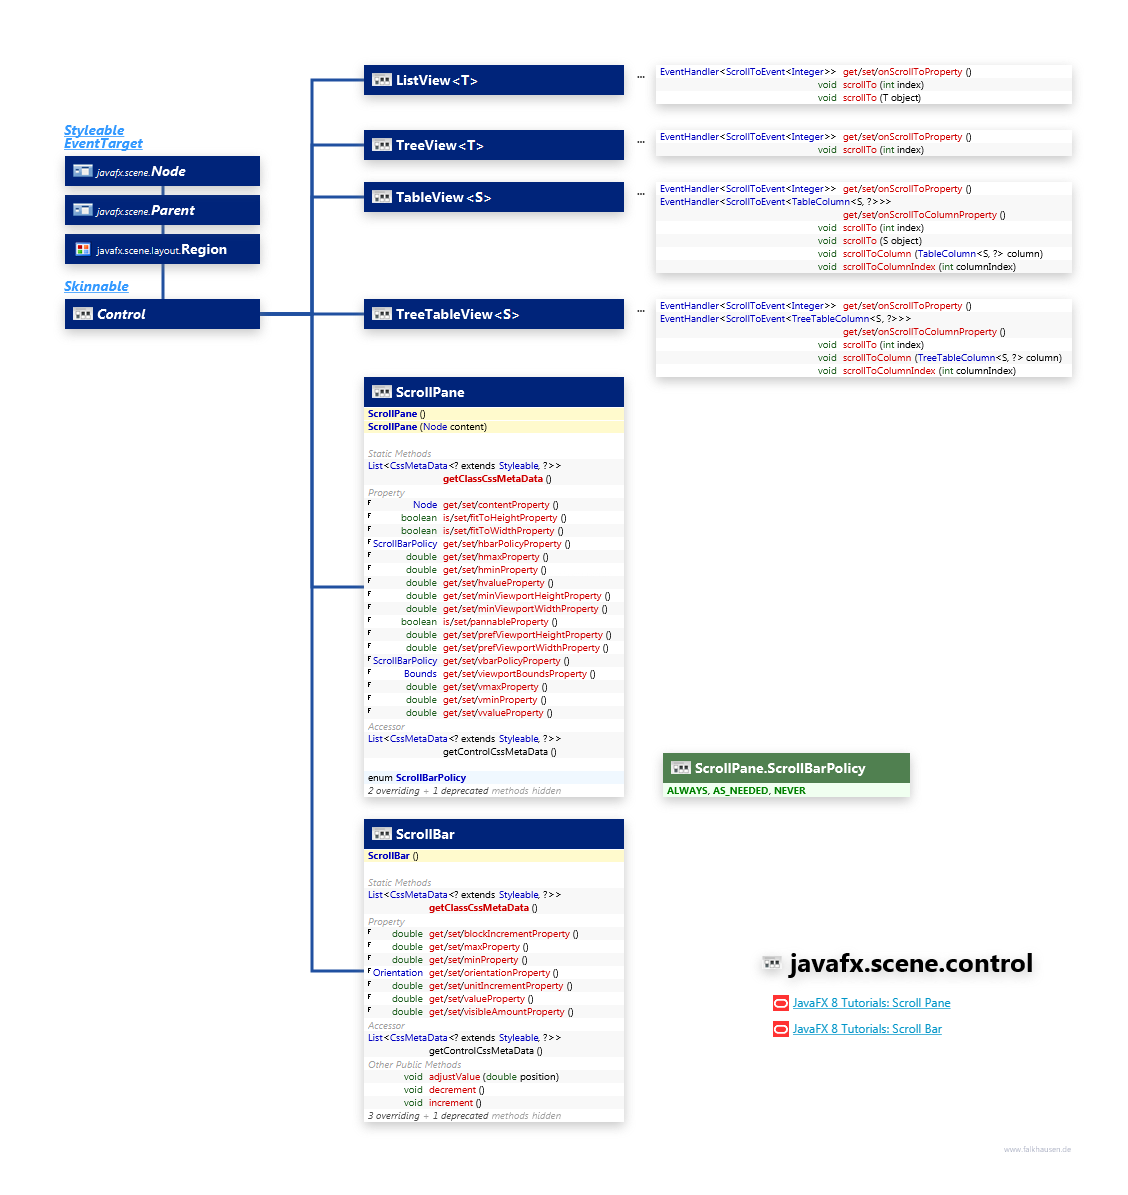 javafx.scene.control Scrolling class diagram and api documentation for JavaFX 8